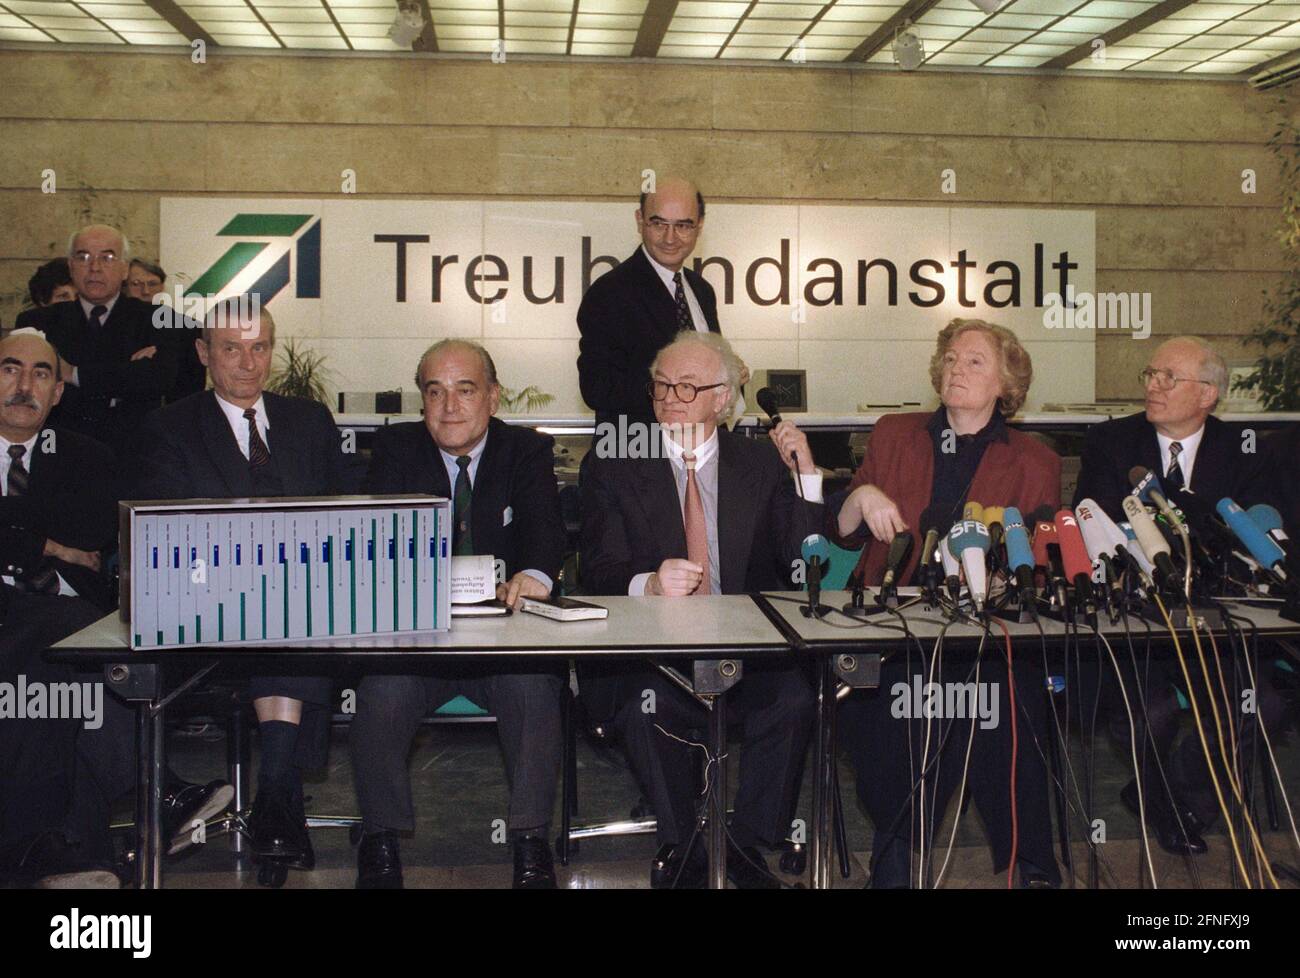 Berlino / Treuhand-Anstalt 1994 Conferenza stampa finale, scioglimento della Treuhand f.Lefts: Klaus Schucht, Lennings, Hero Harms, Birgit Breuel, Heinrich Hornef // Treuhandanstalt / GDR [traduzione automatizzata] Foto Stock